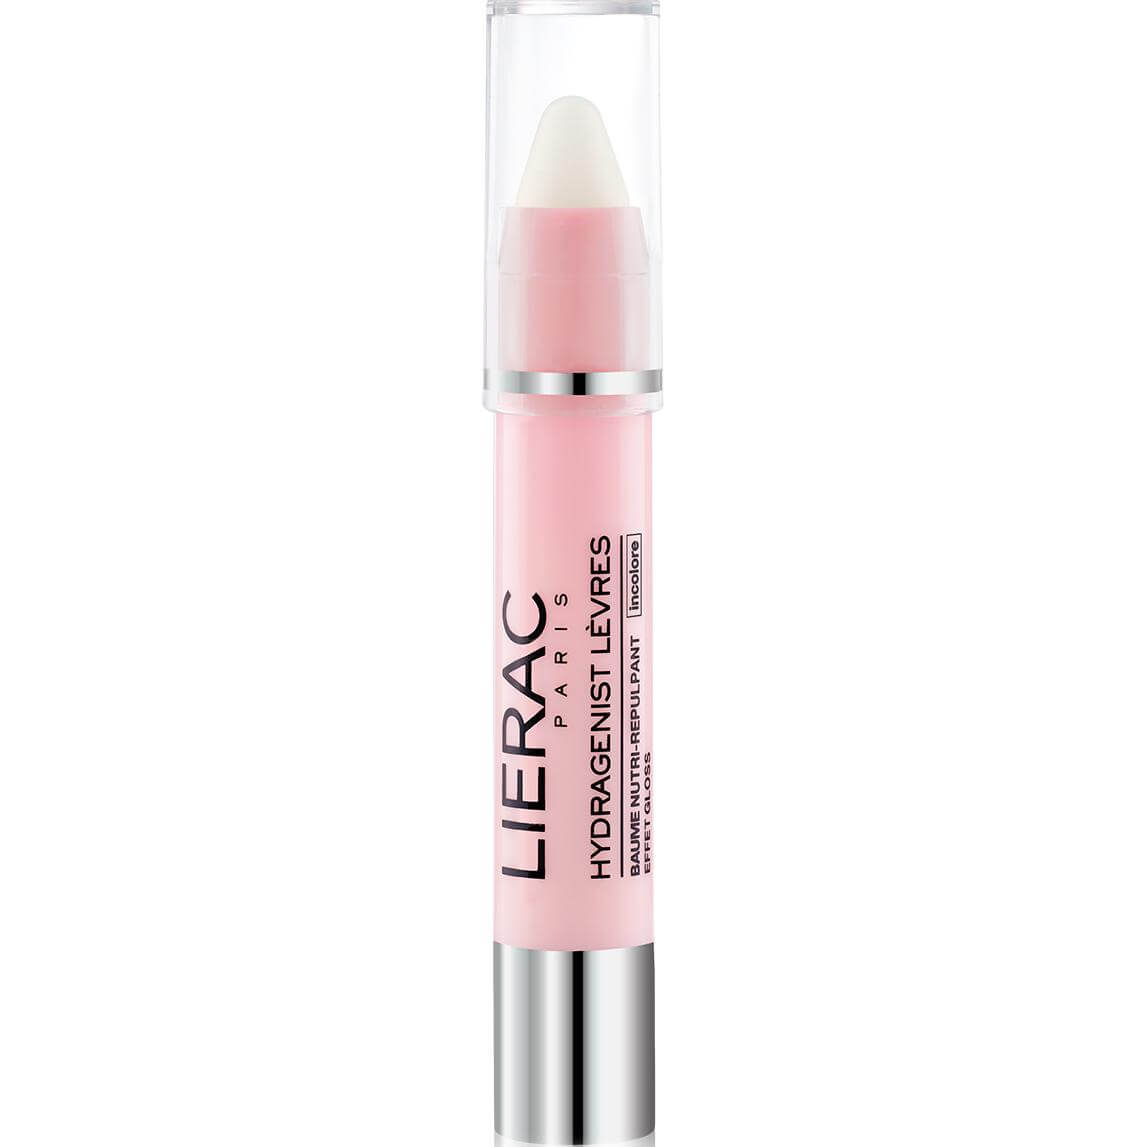 Lierac Hydragenist Lips Nutri Replumping Balm Incolore Βάλσαμο Θρέψης & Επαναπύκνωσης για τα Χείλη με Αποτέλεσμα Φυσικό Gloss 3g